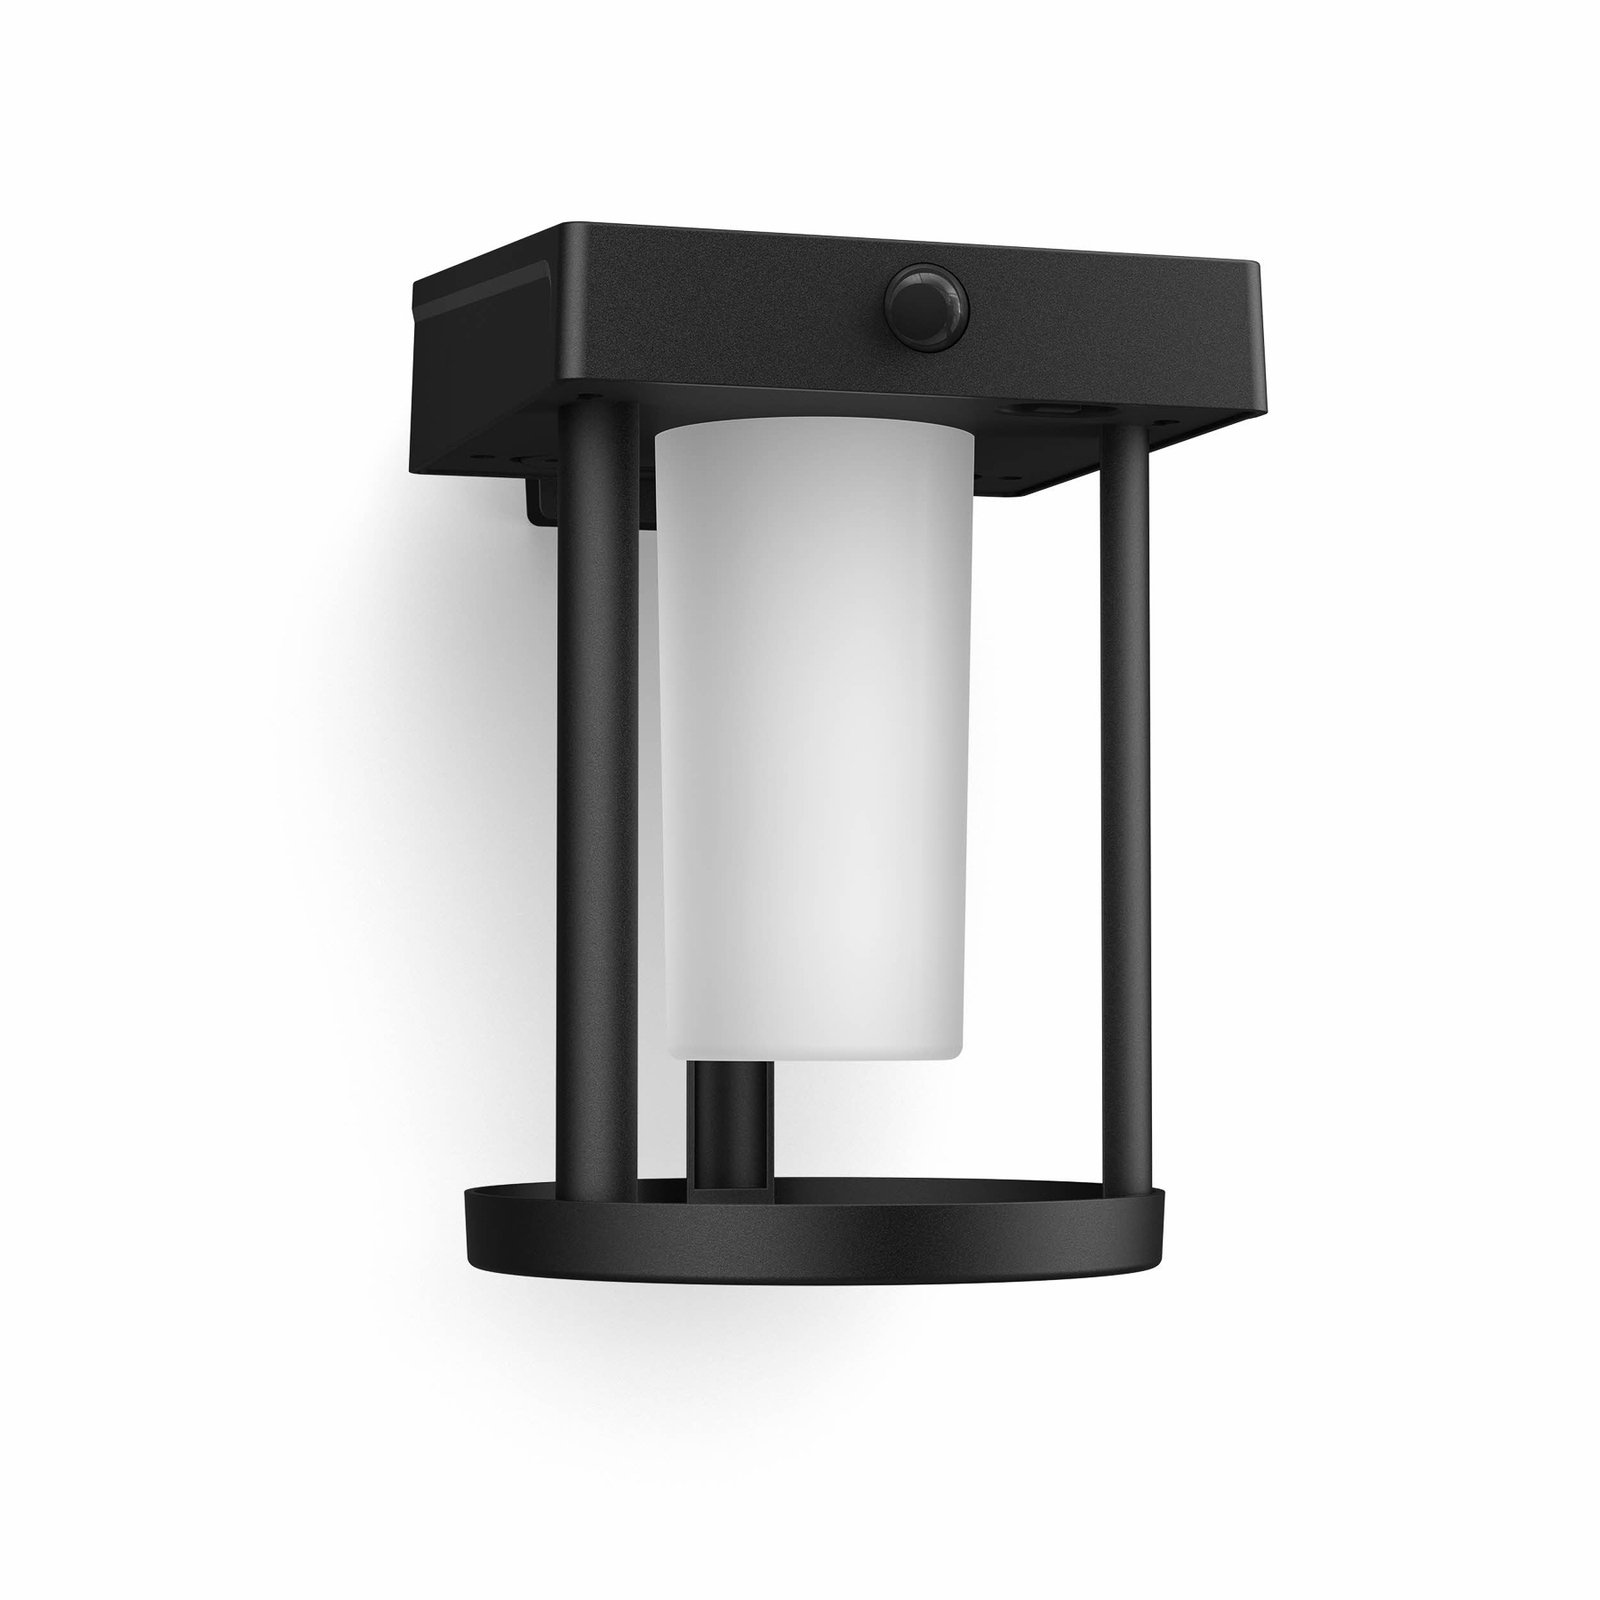 Philips LED-Solar-Wandlampe Camill, schwarz/weiß, Ø 14 cm